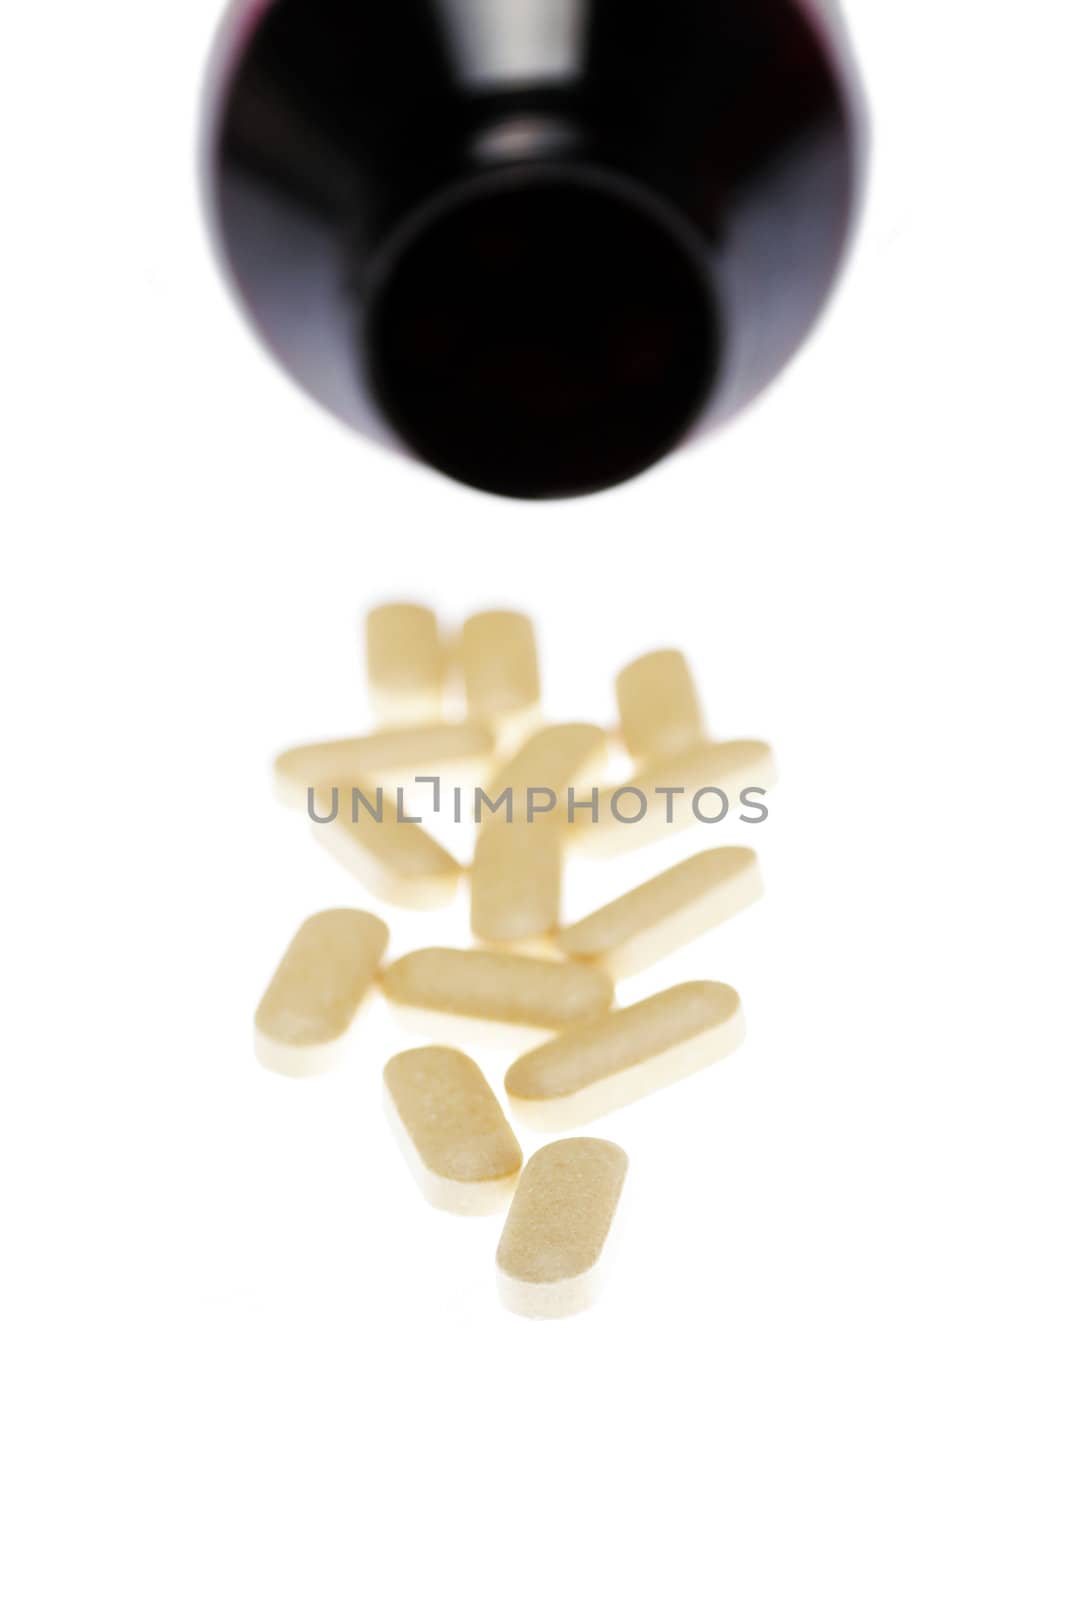 Pills In Front Of Dark Bottle, Medical Background,  Focus On Front